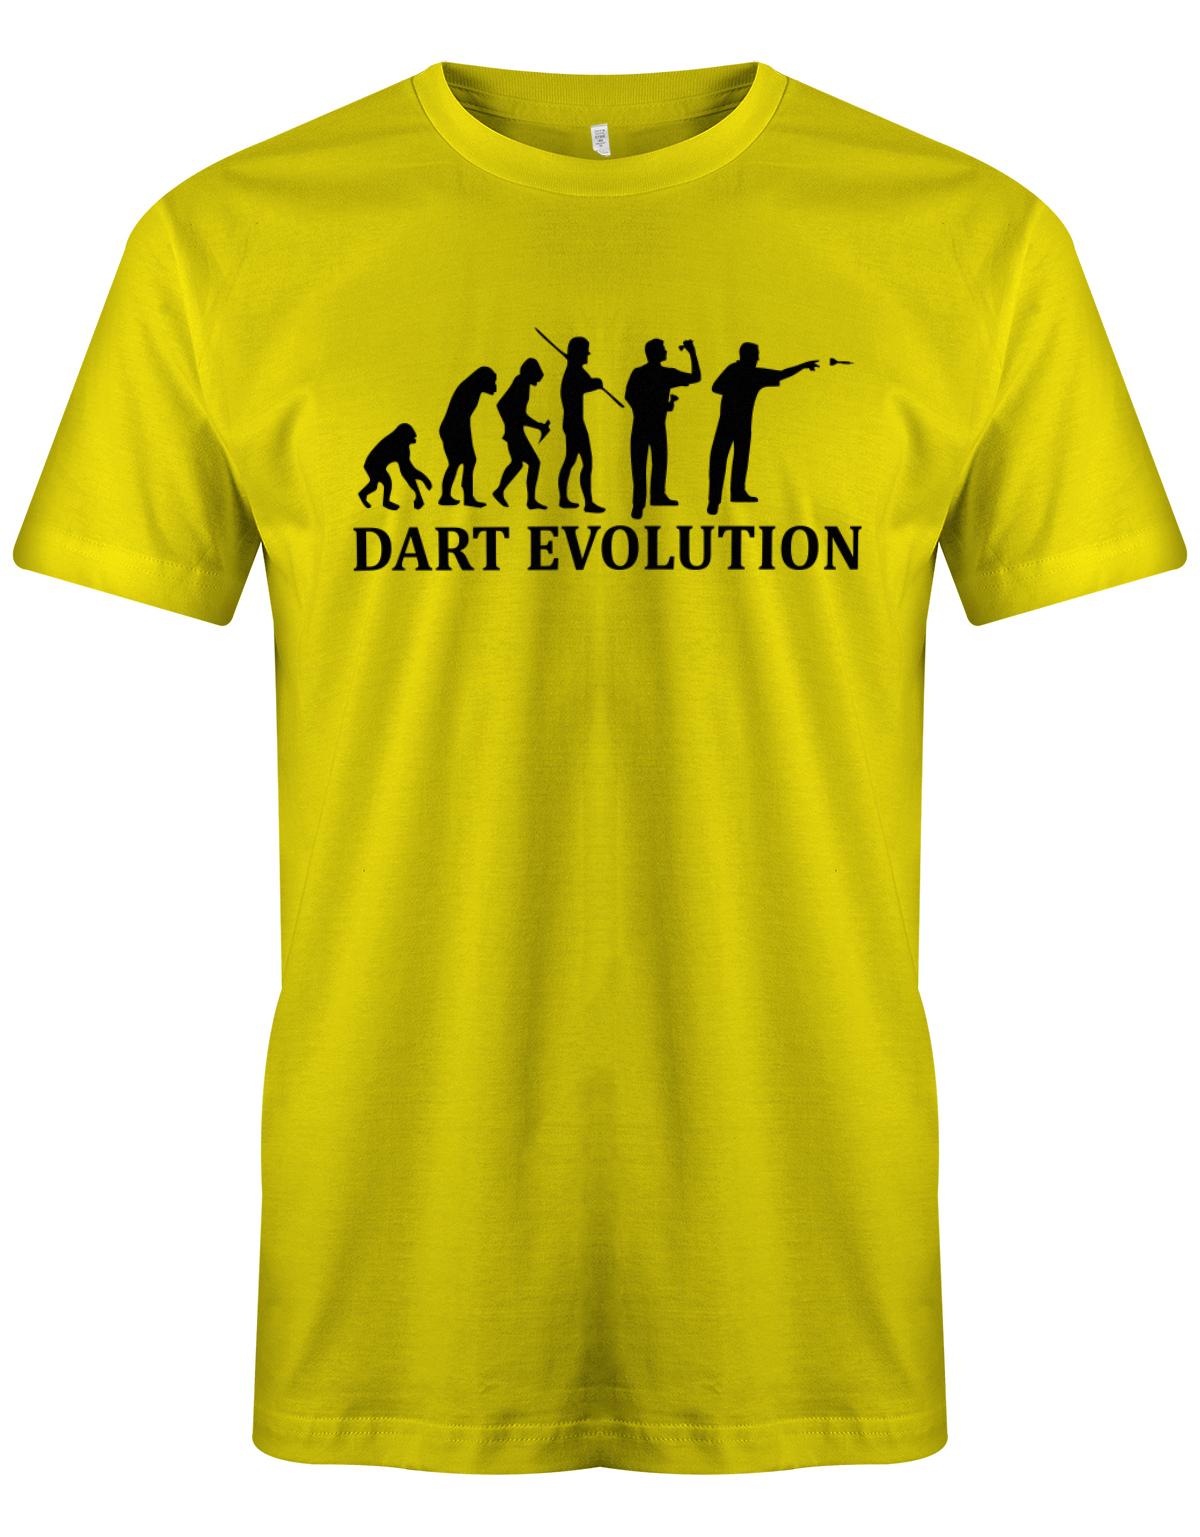 Dart Evolution - Herren Dart T-Shirt gelb